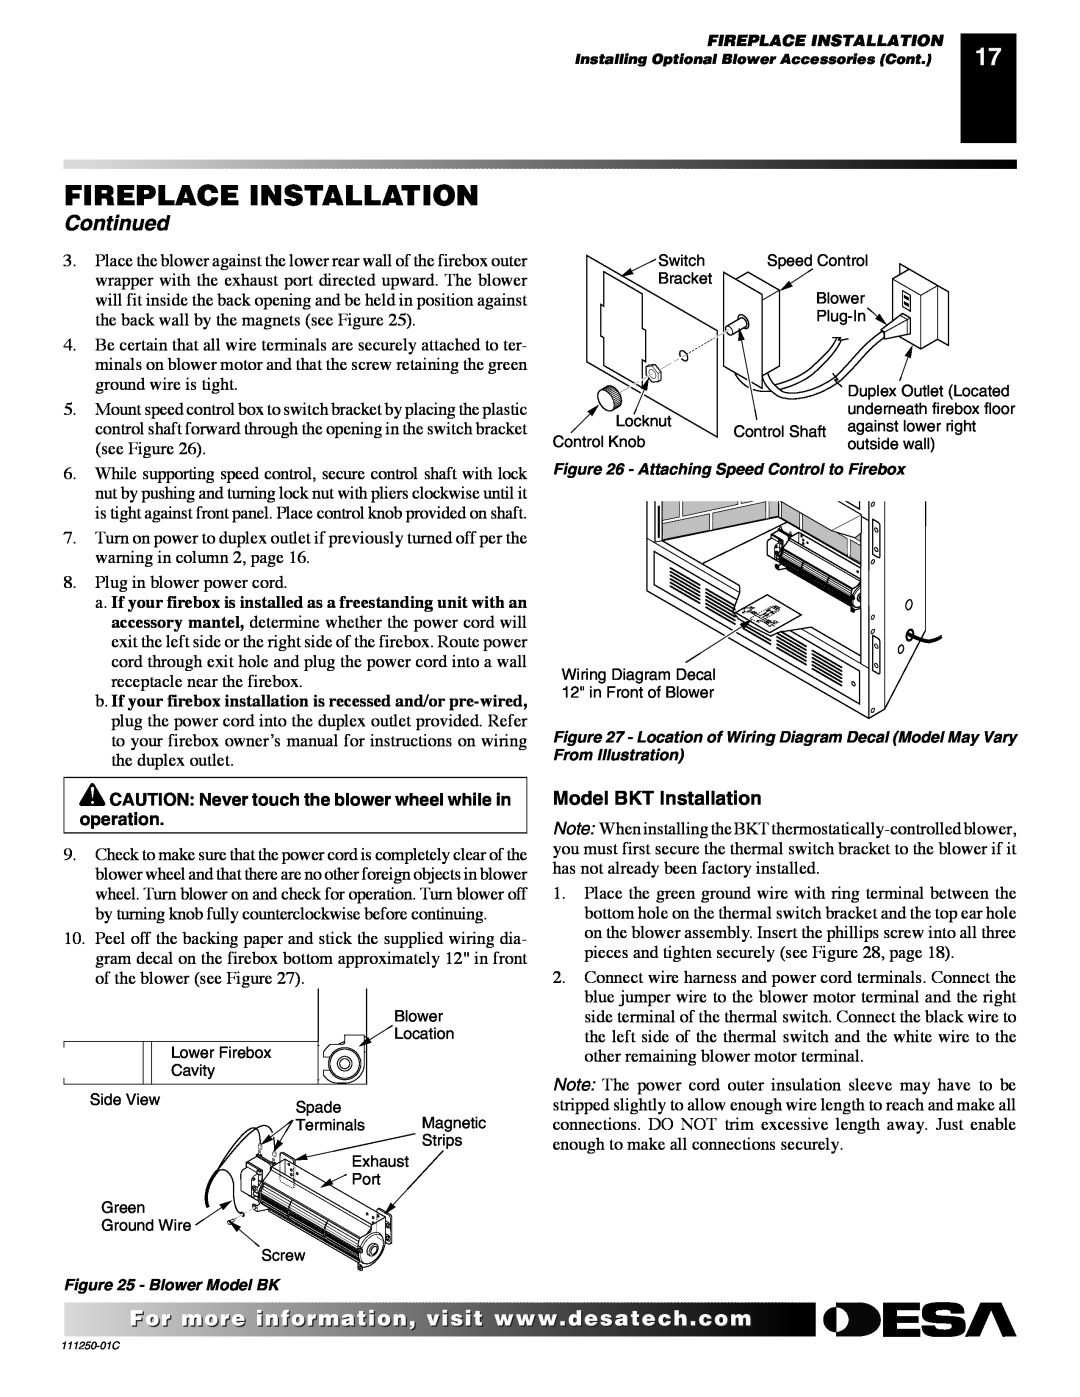 Desa (V)T36NA SERIES installation manual Fireplace Installation, Continued, Model BKT Installation 